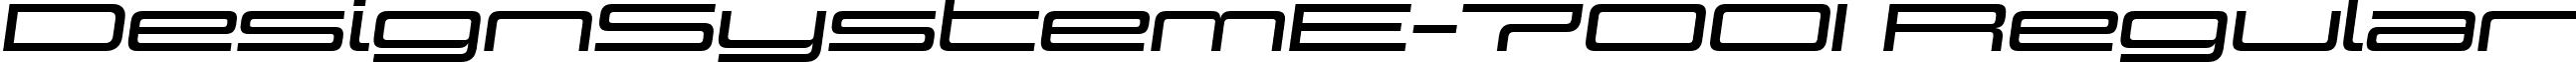 DesignSystemE-700I Regular font - Design System E 700 Italic.ttf